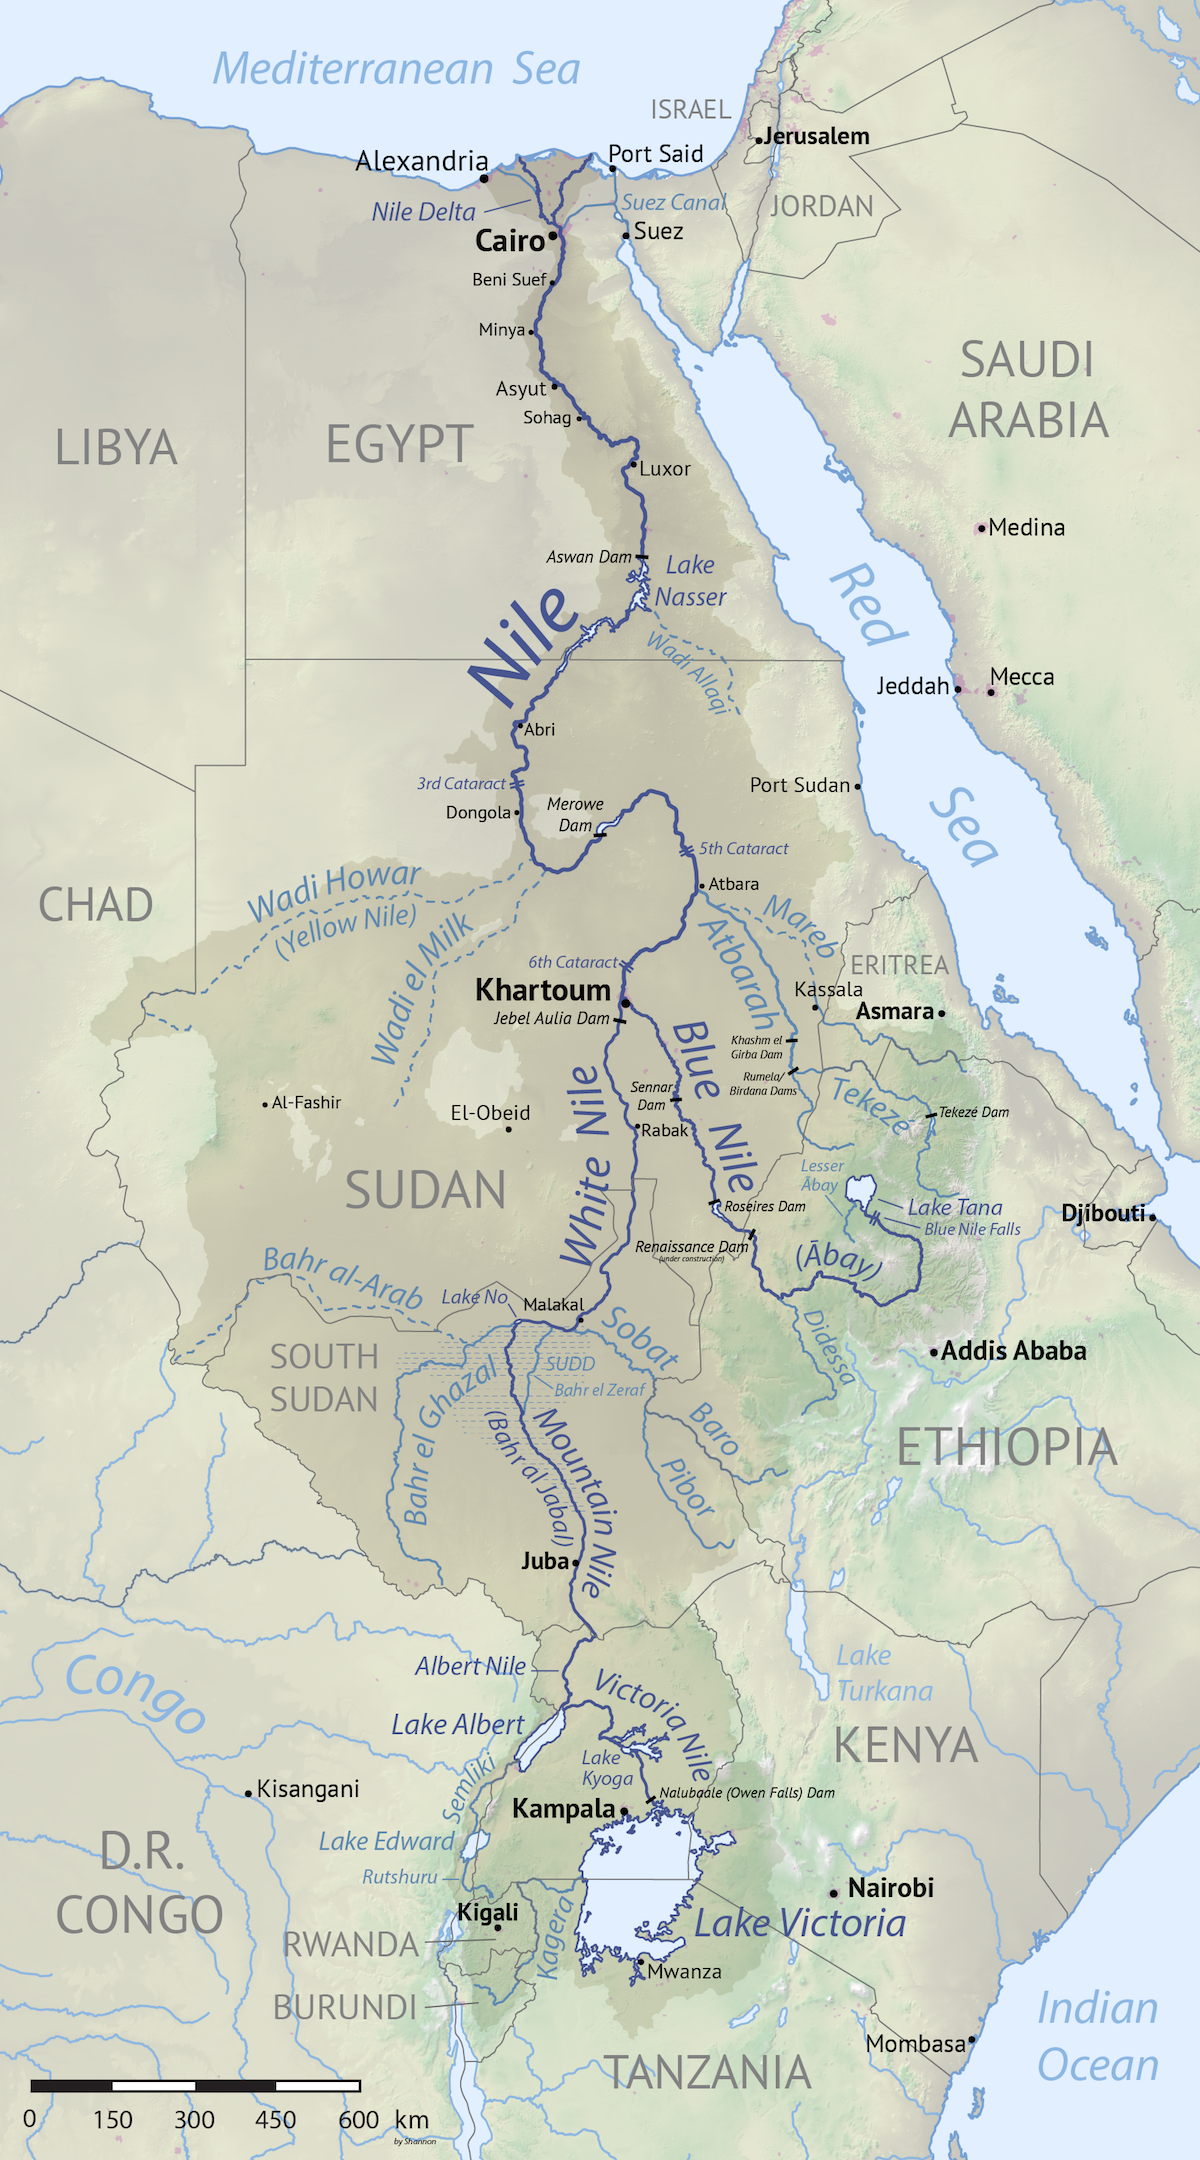 Africa - Nile basin • Map • PopulationData.net